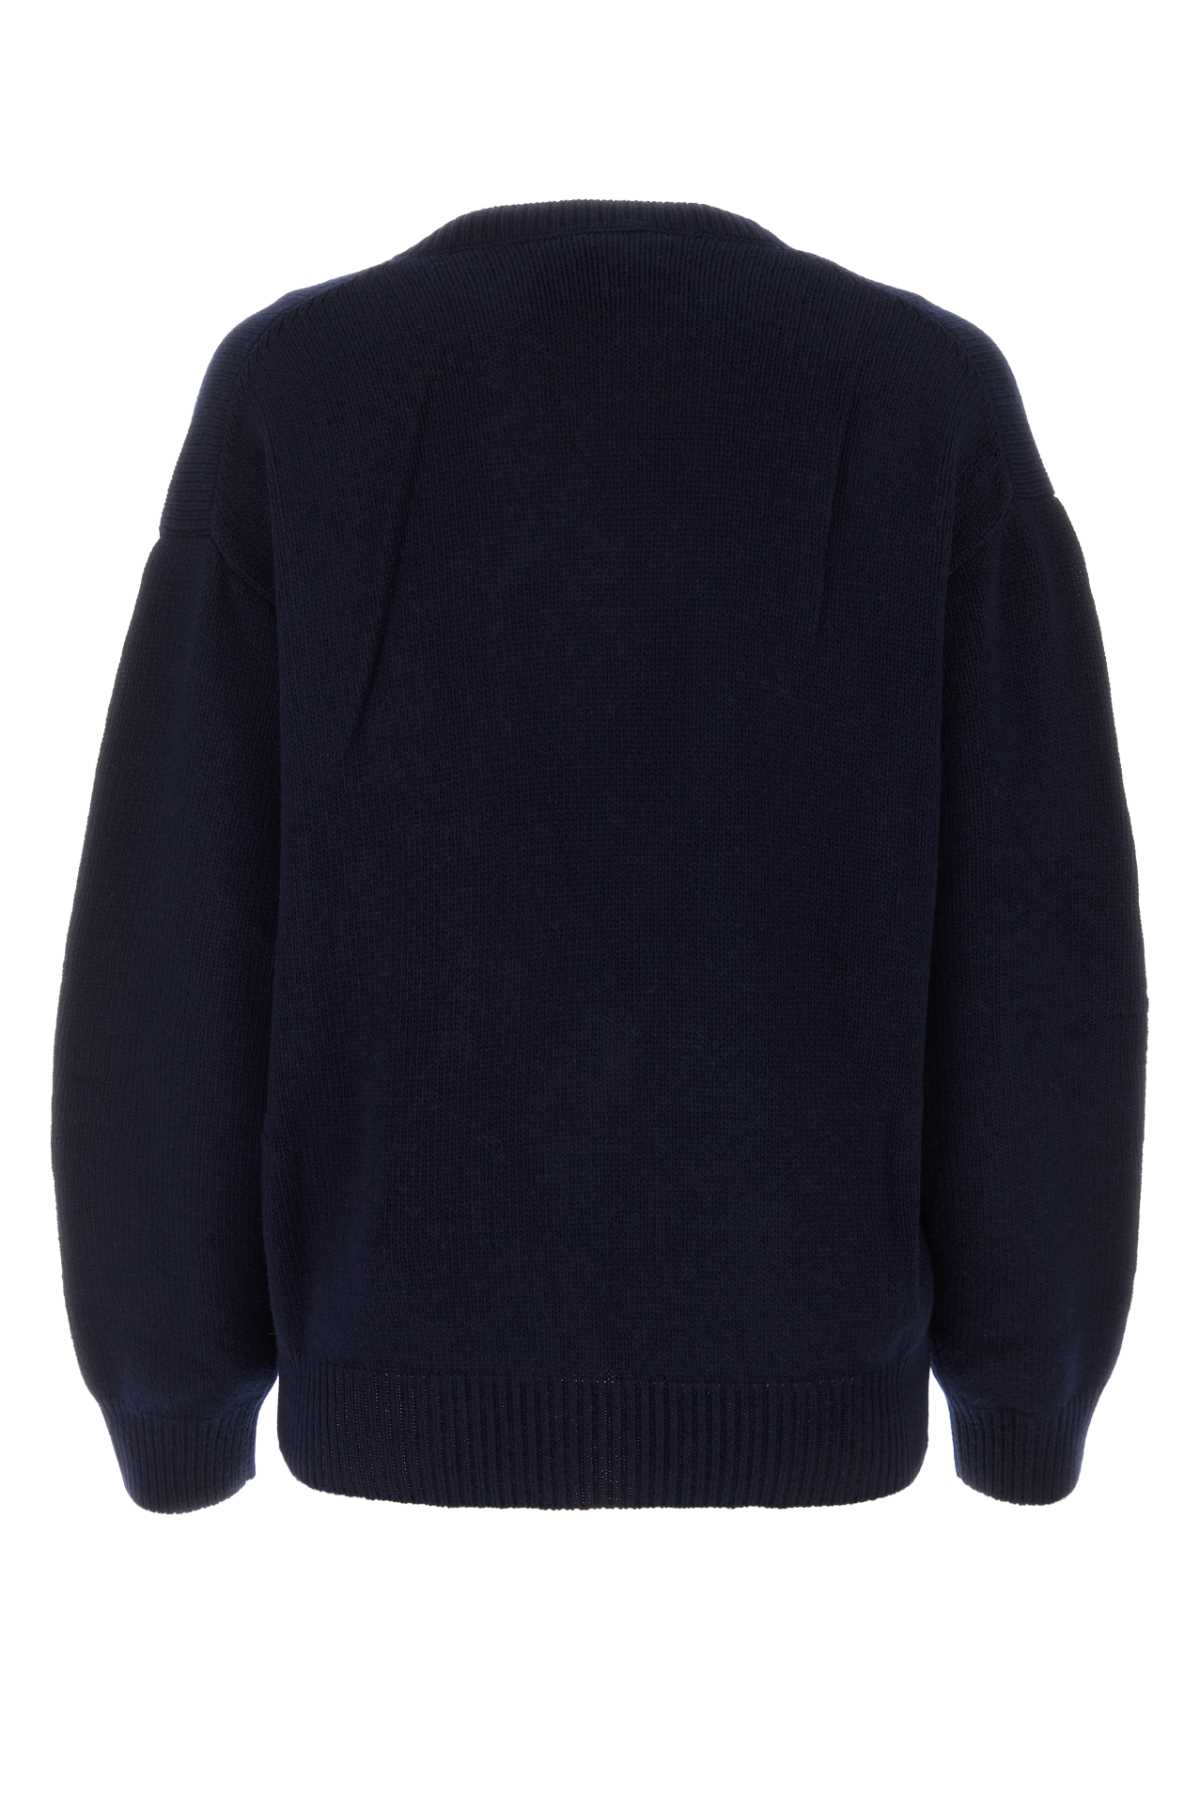 Prada Dark Blue Wool Blend Sweater In Navy